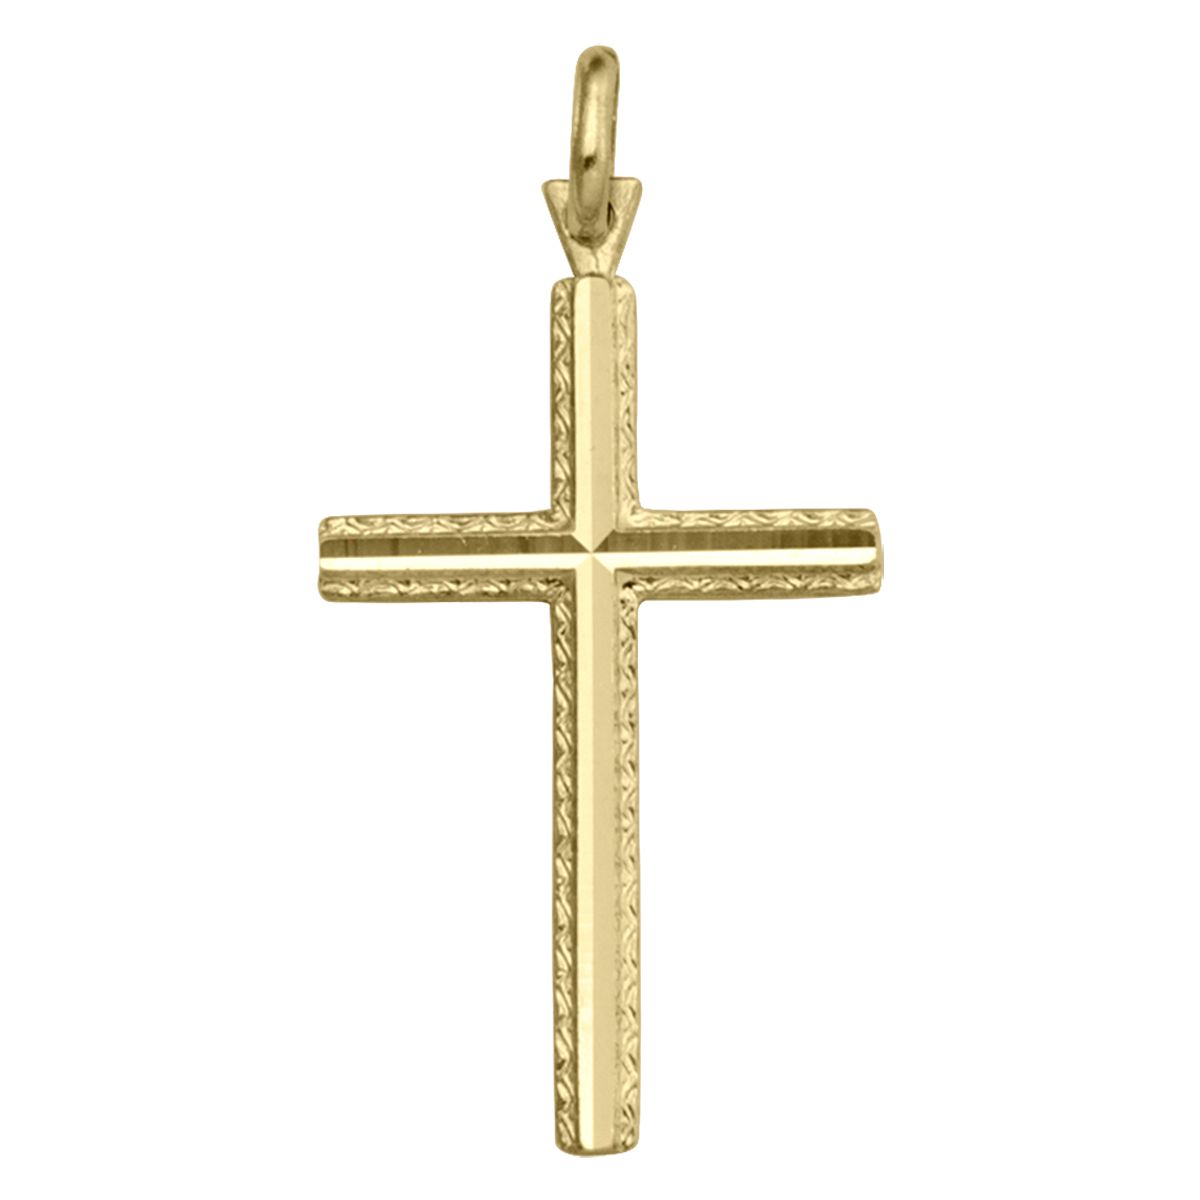 X0410, Gold Cross, Beveled Design